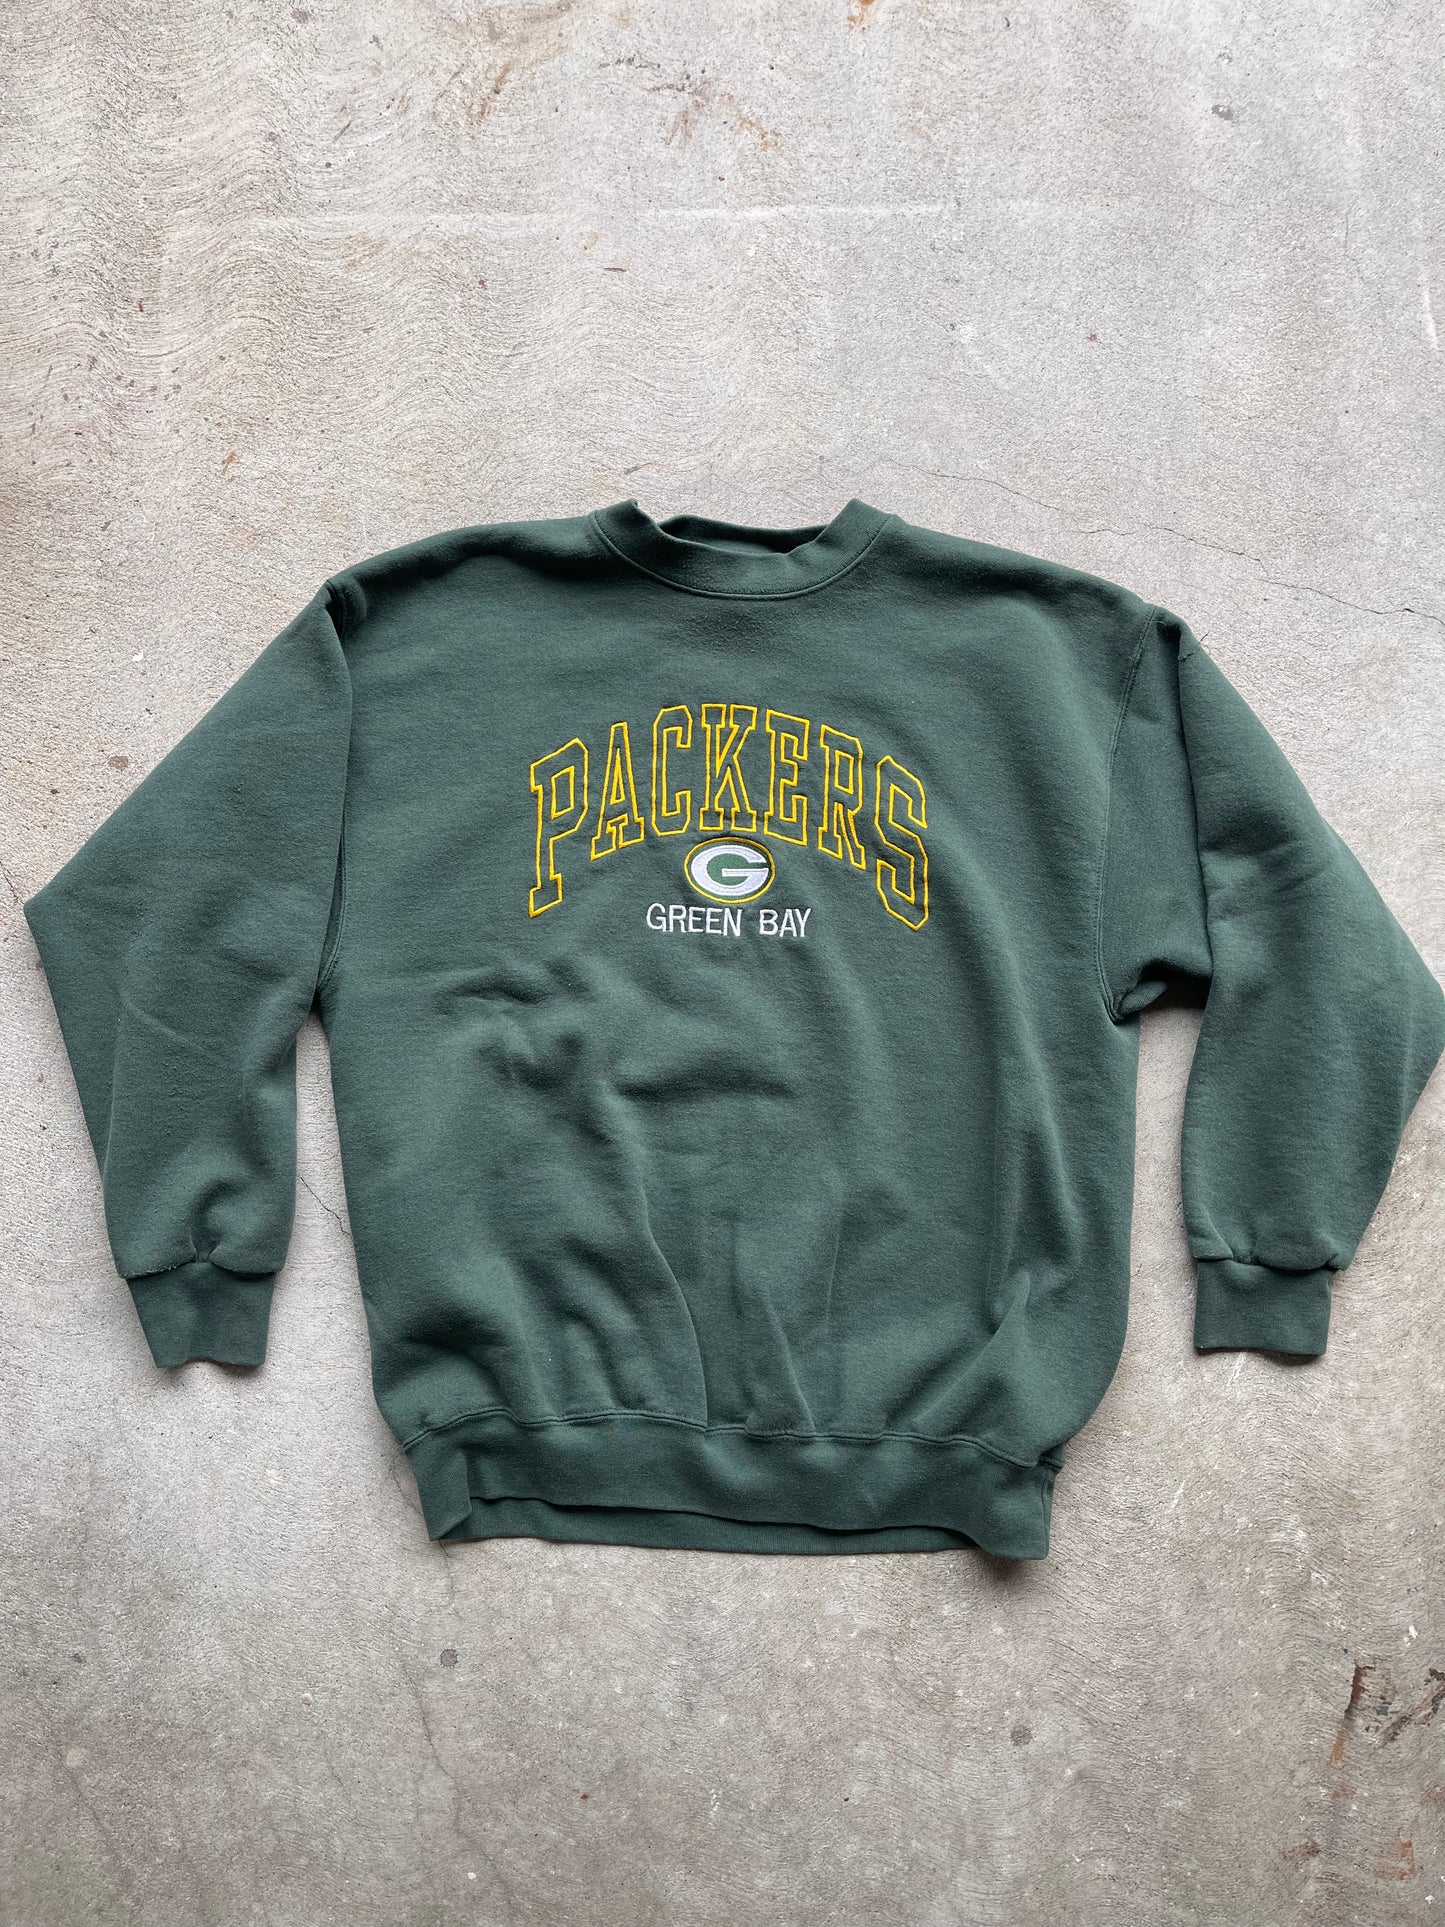 Pre-loved Green Bay Packers Sweatshirt - L